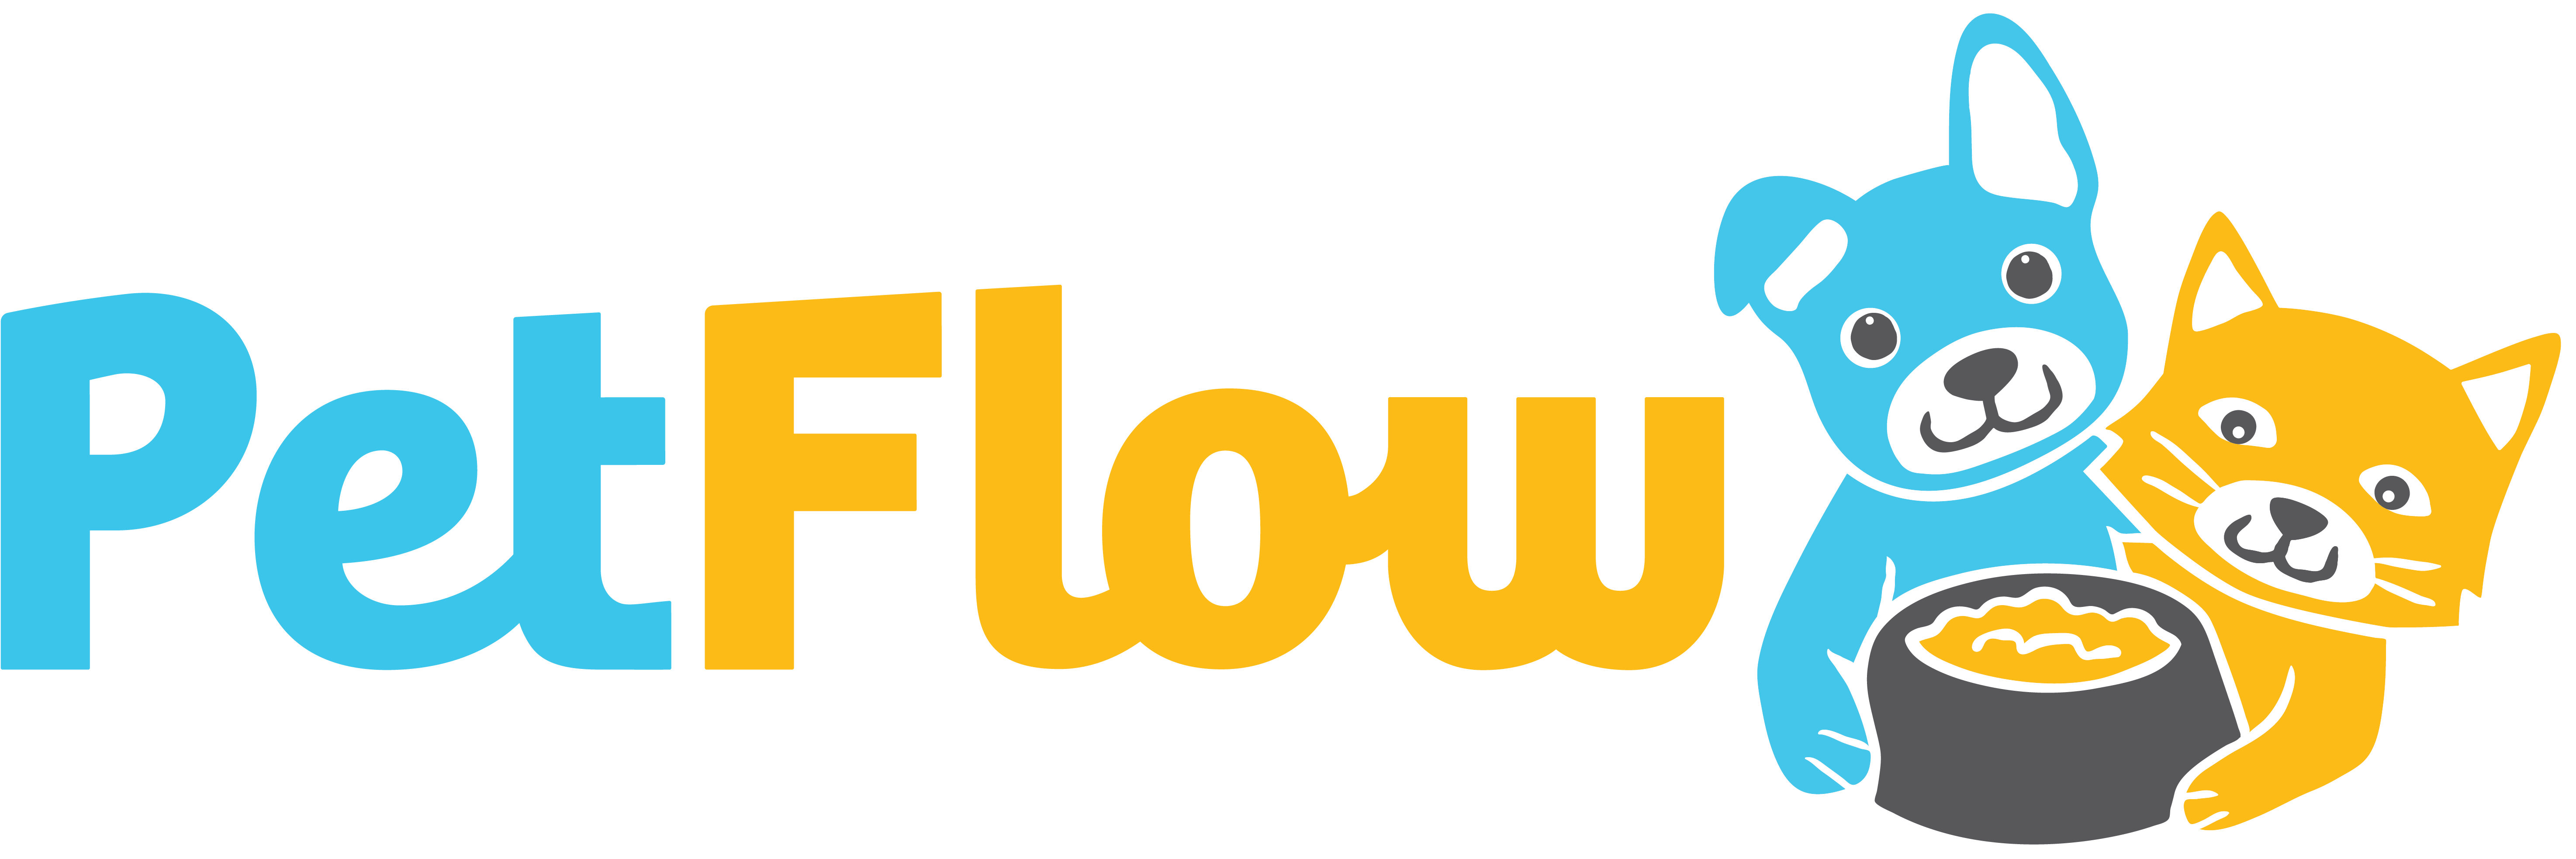 Pet-flow Logo - Pet Flow (6667x2683), Png Download